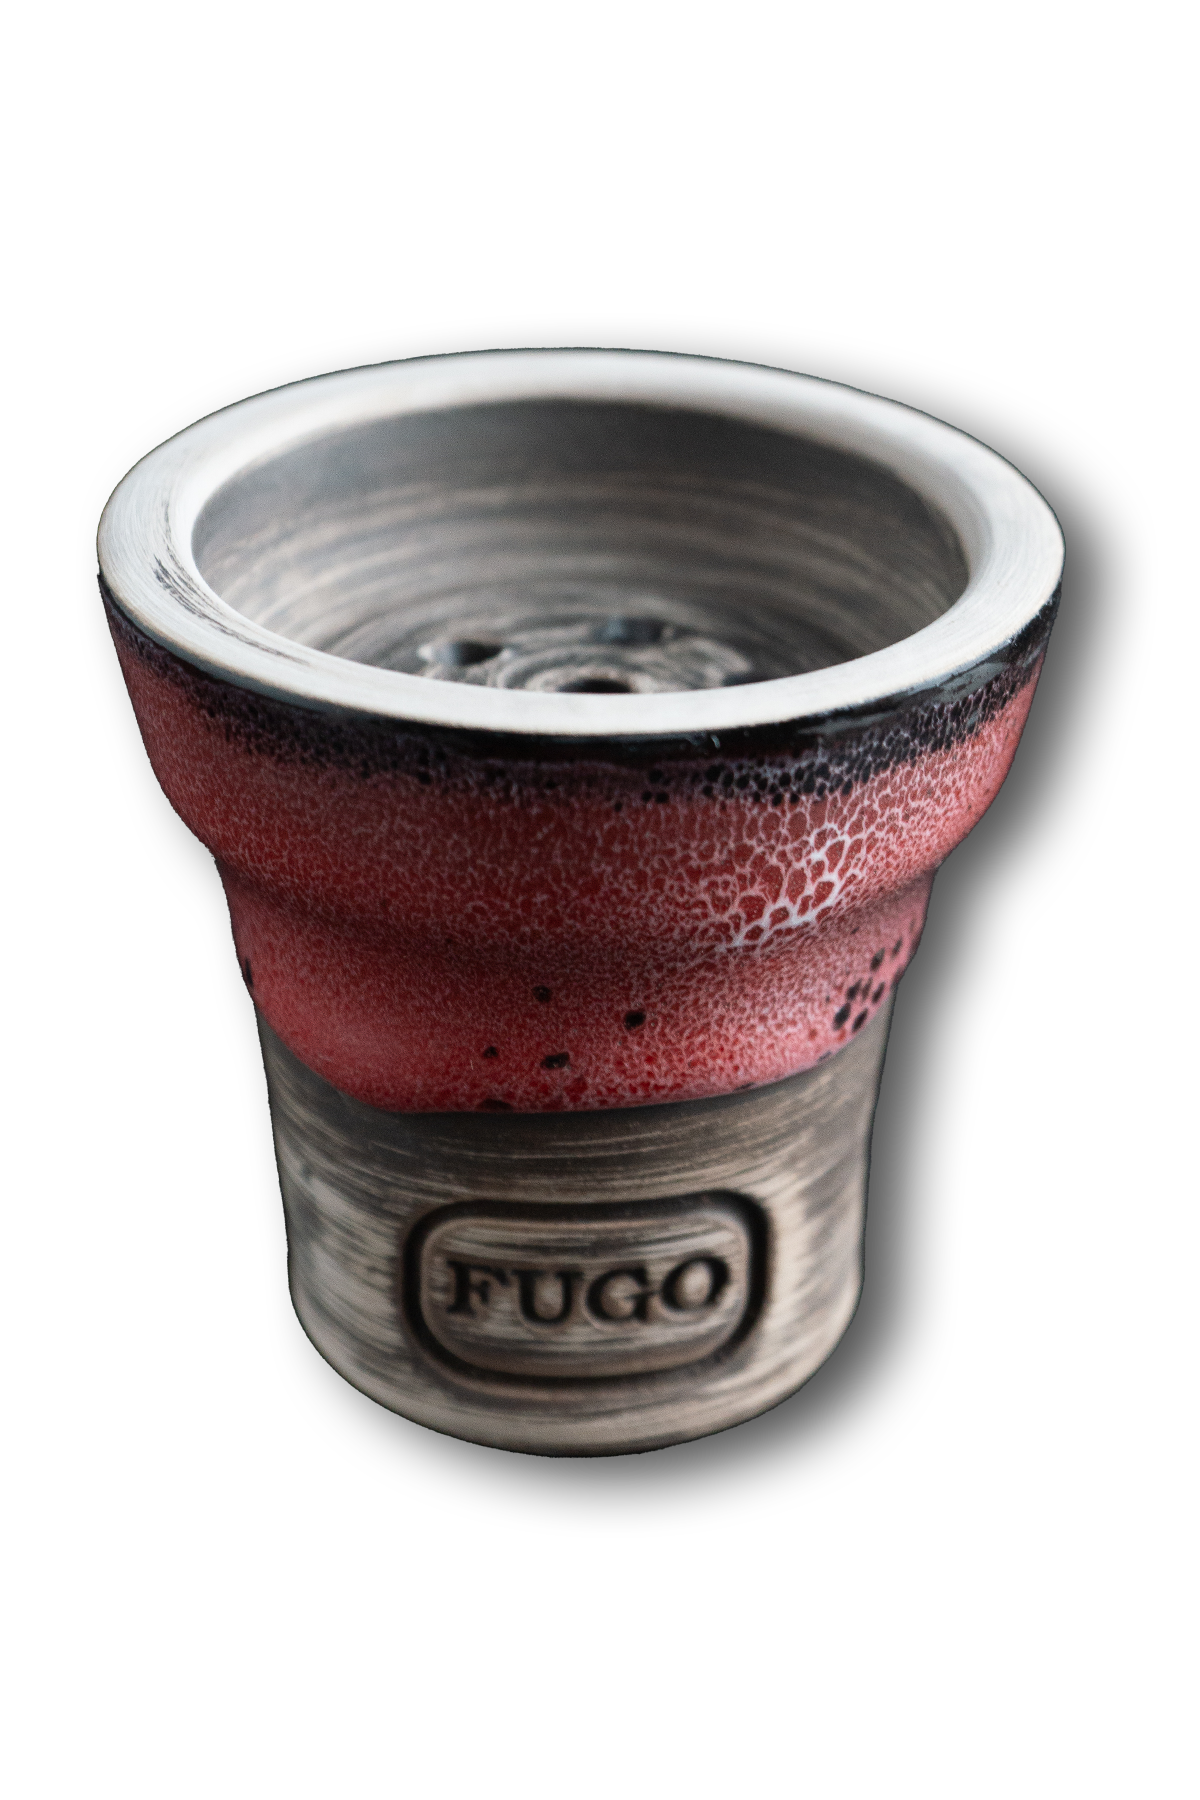 Bowl - FUGO Glazed Red Lava new